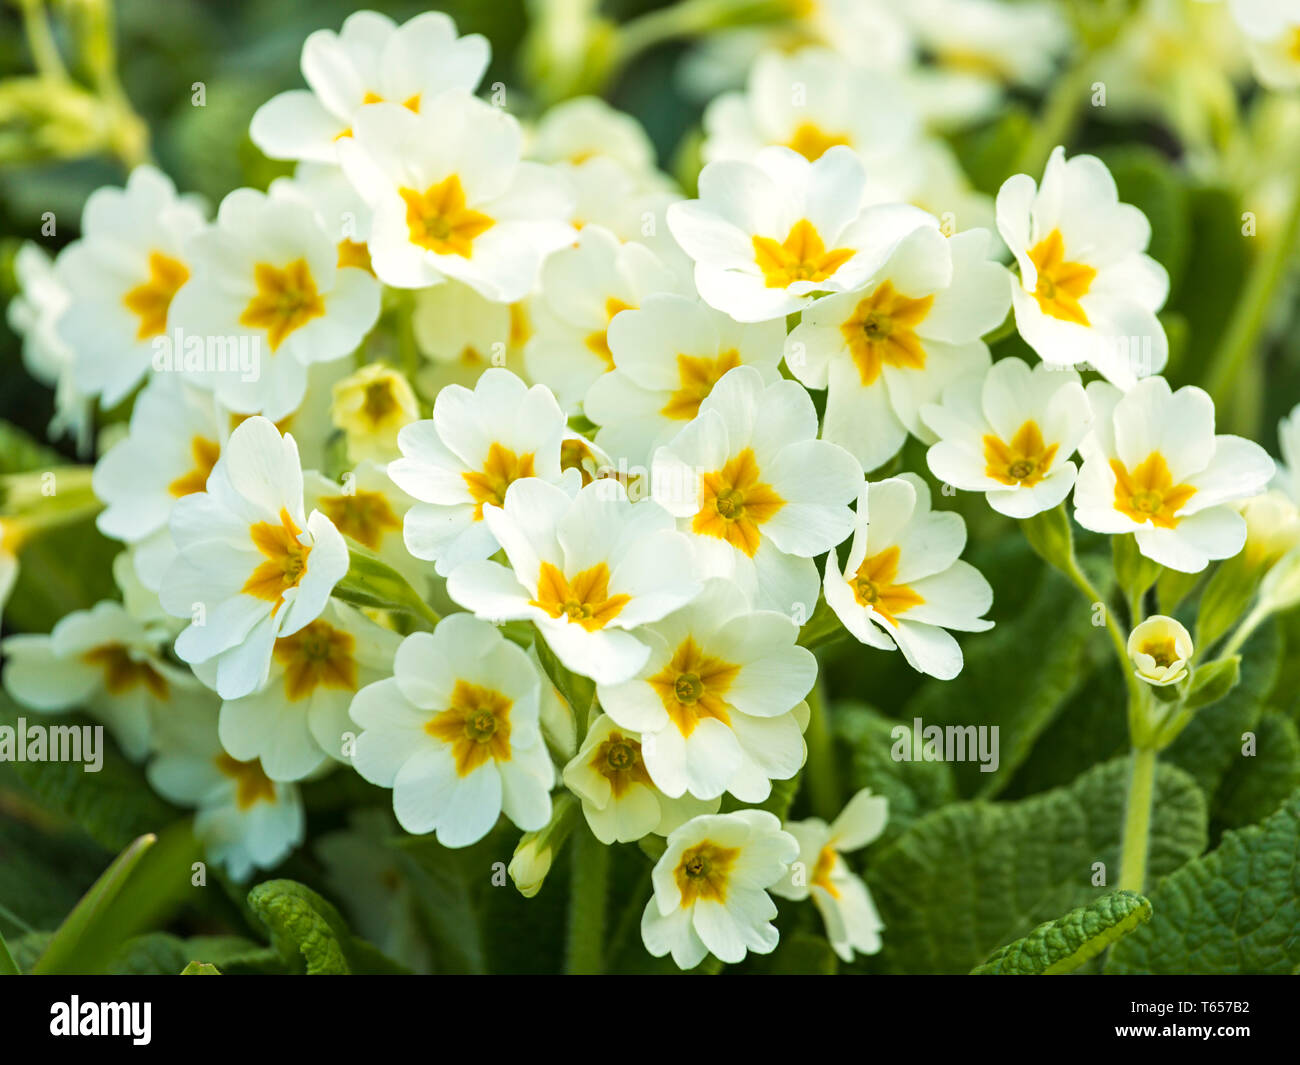 Common Primrose Or Primula Vulgaris Flowers In A Garden Stock Photo Alamy